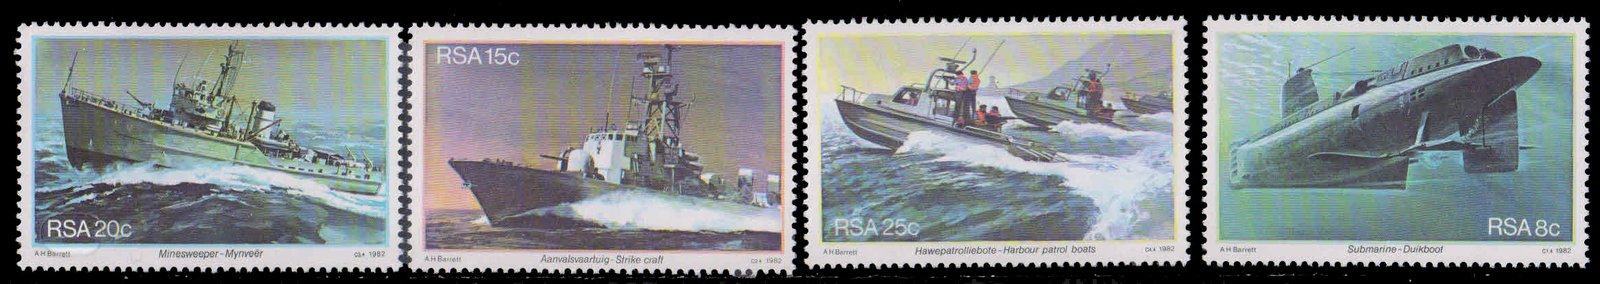 SOUTH WEST AFRICA 1982-Noval Base-Submarine, Harbour Patrol Boats, Set of 4 Stamps, MNH, S.G. 506-509